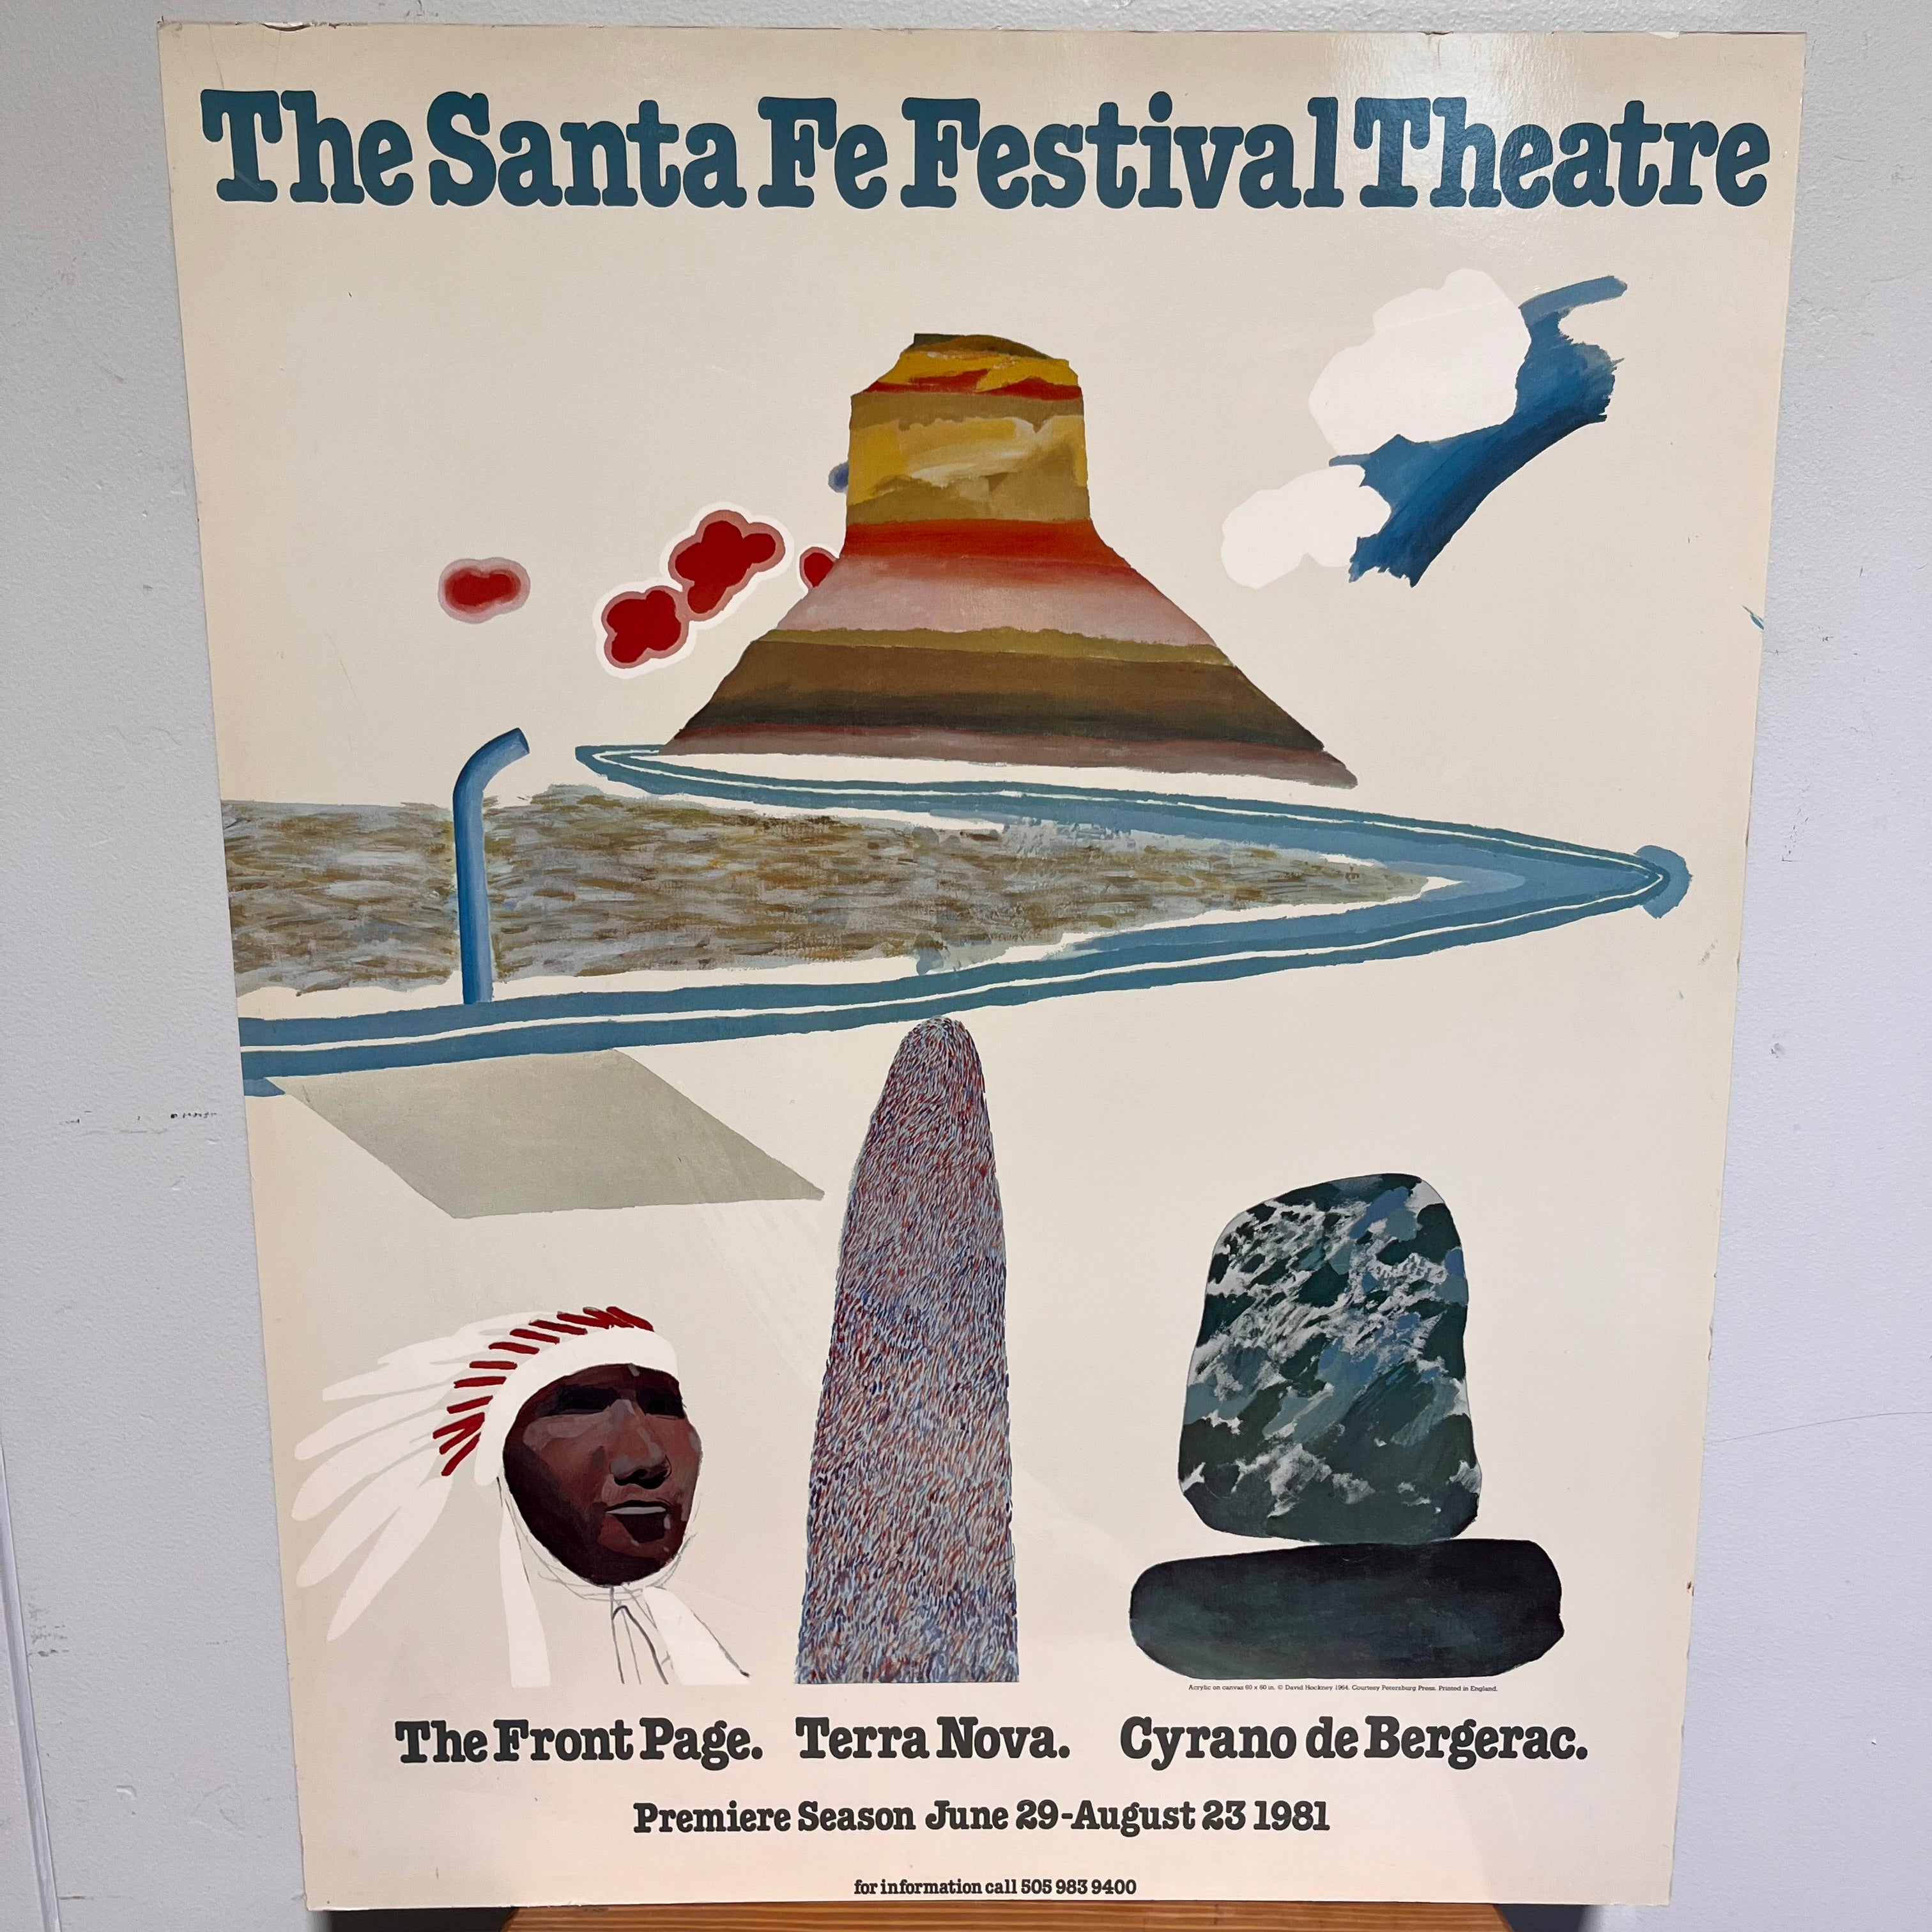 The Santa Fe Festival Theatre 1981 Poster by David Hockney 24"x 30.75" x1"